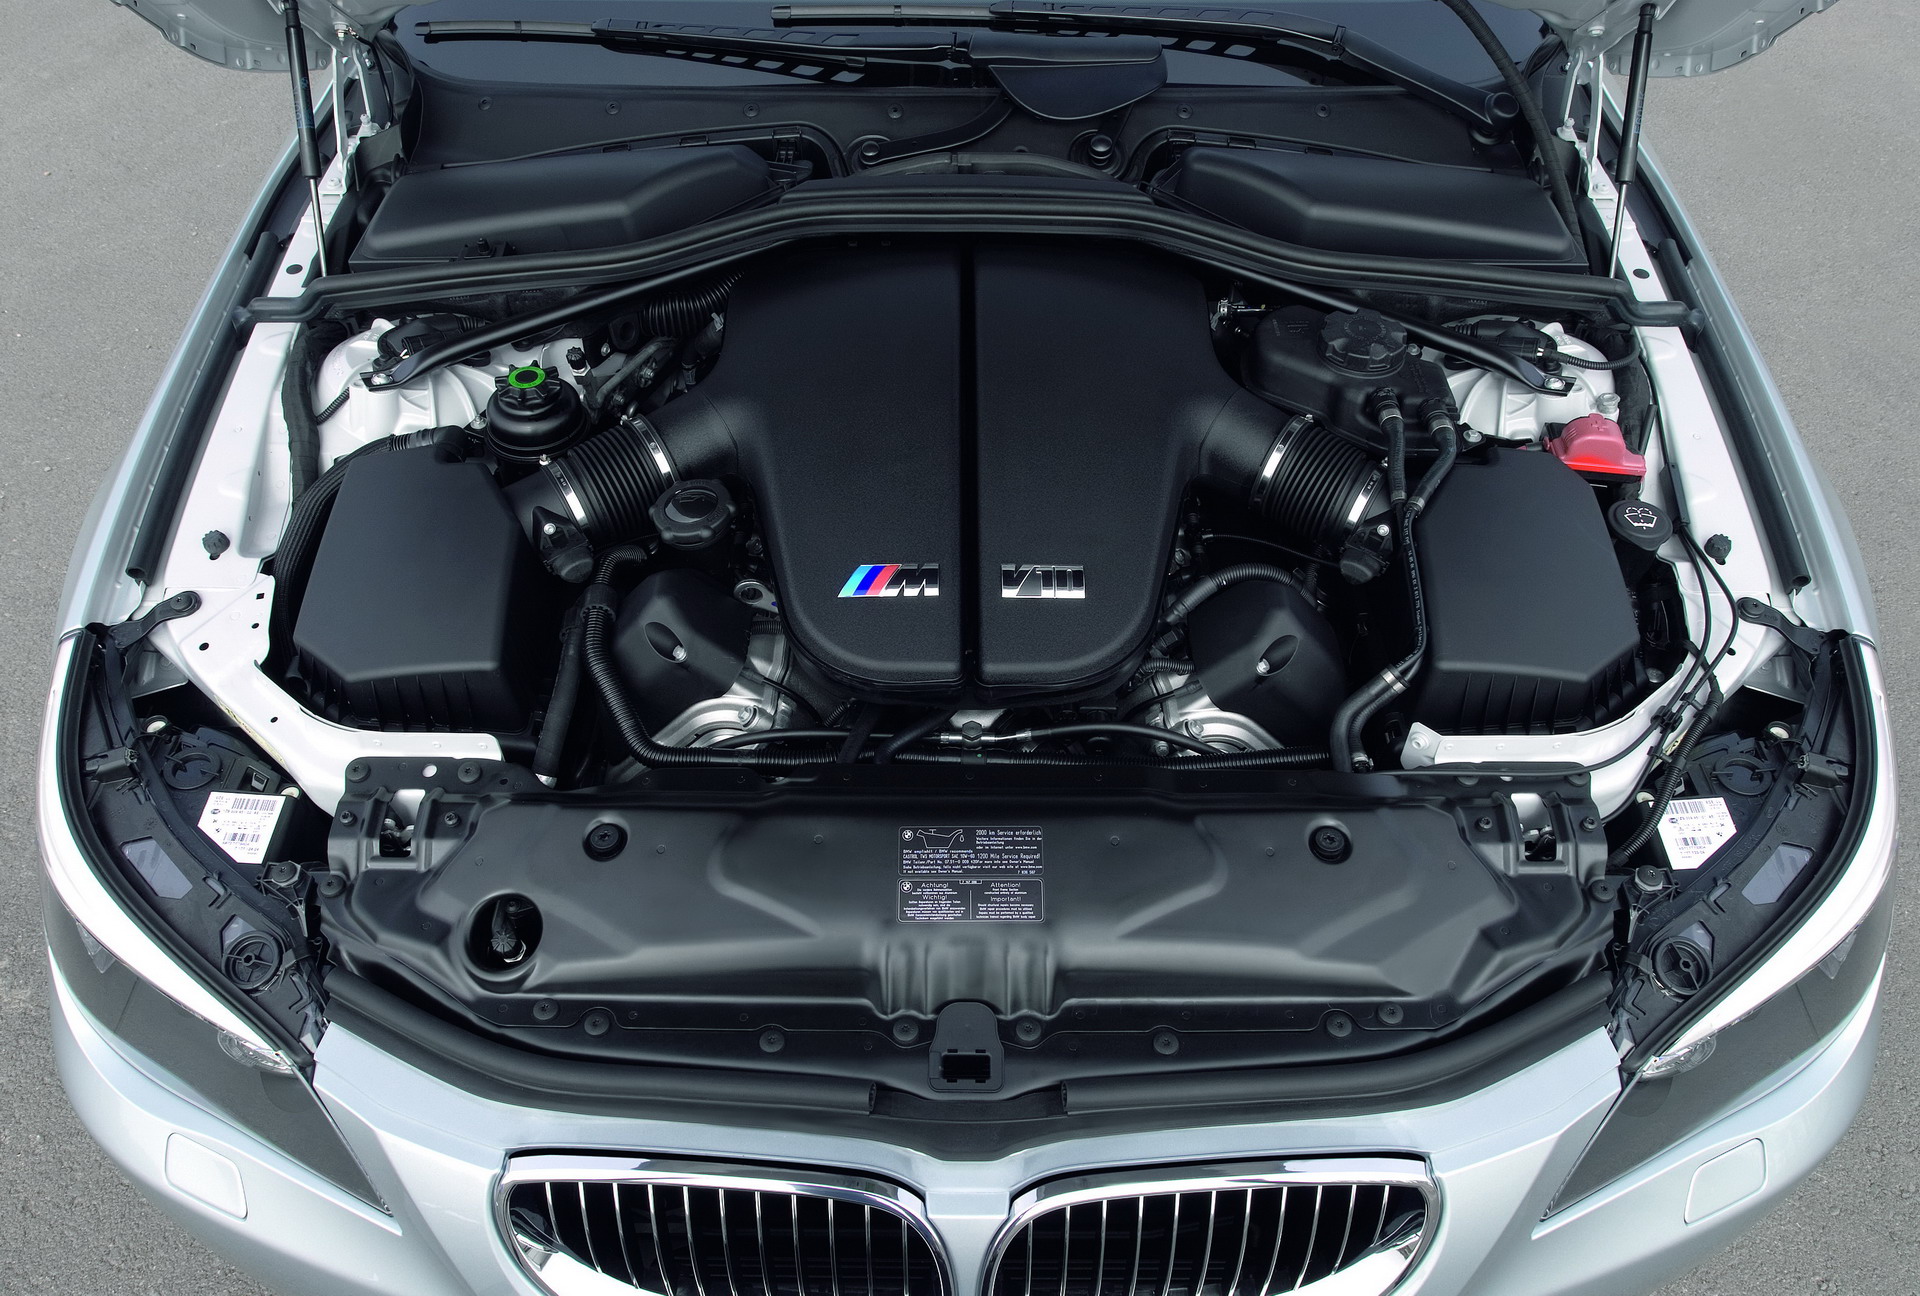 The BMW S85 V10 engine 15